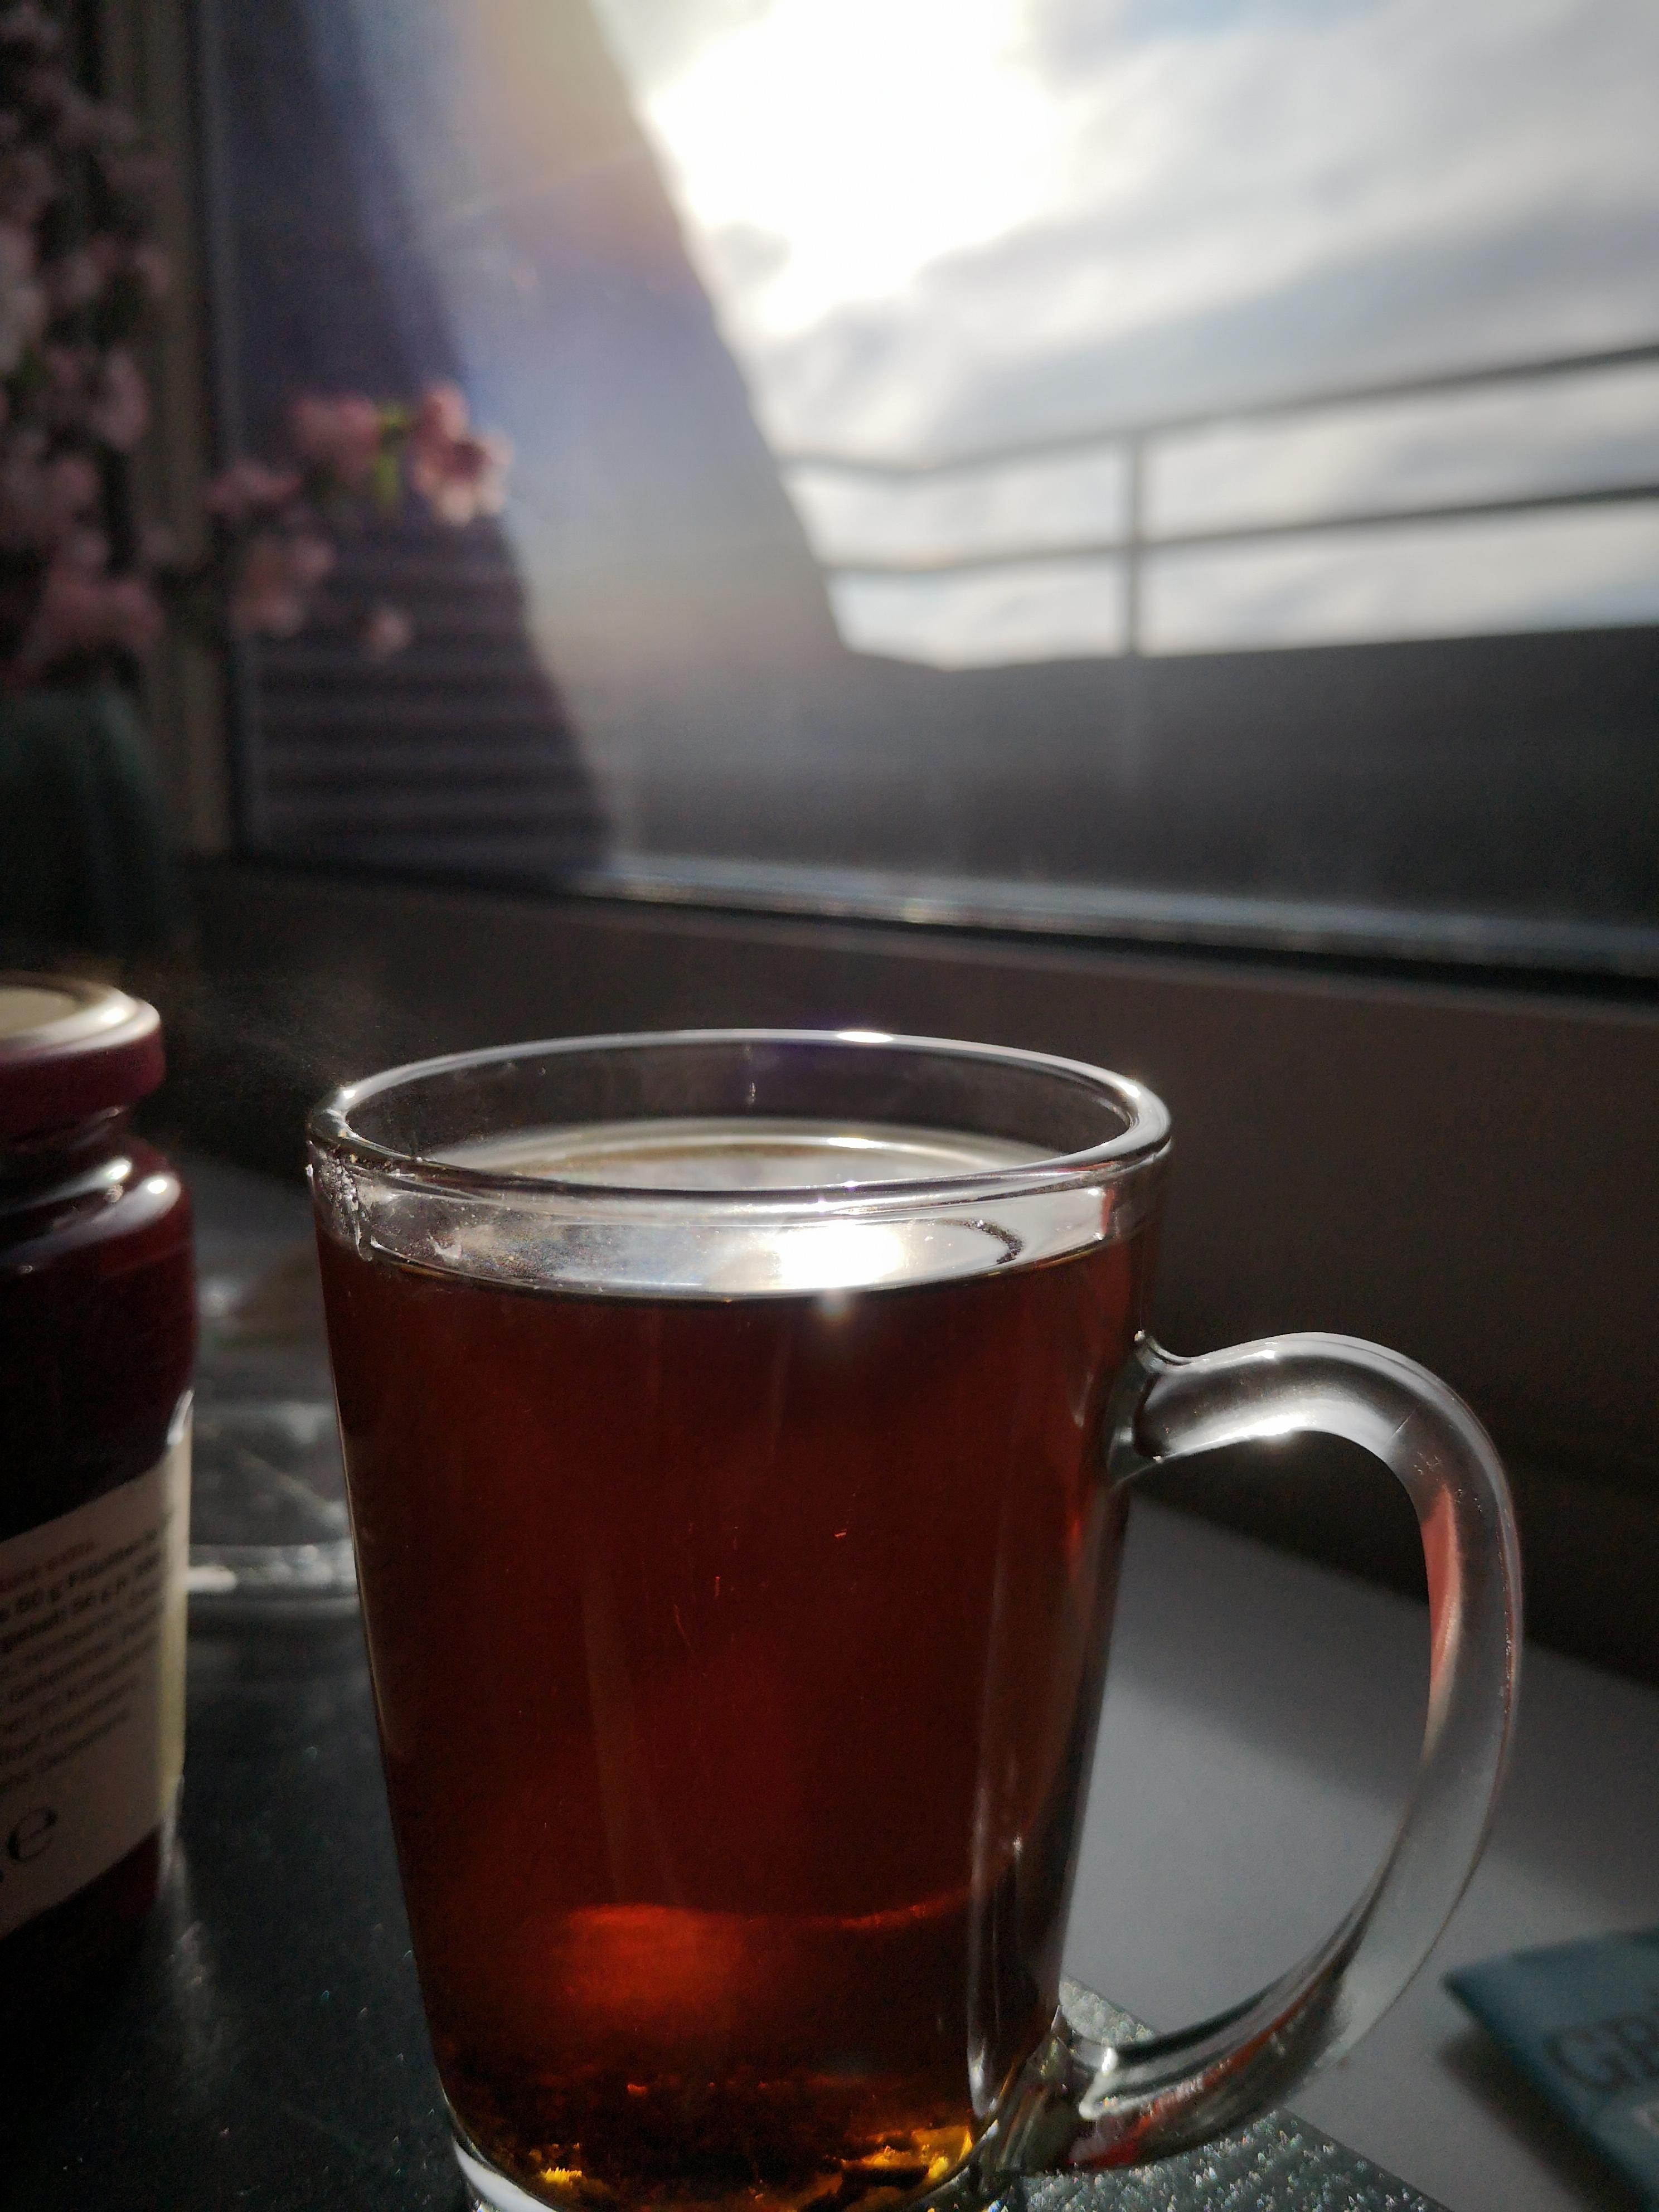 Good morning Tea...
#tee #sonnenschein #herbst 